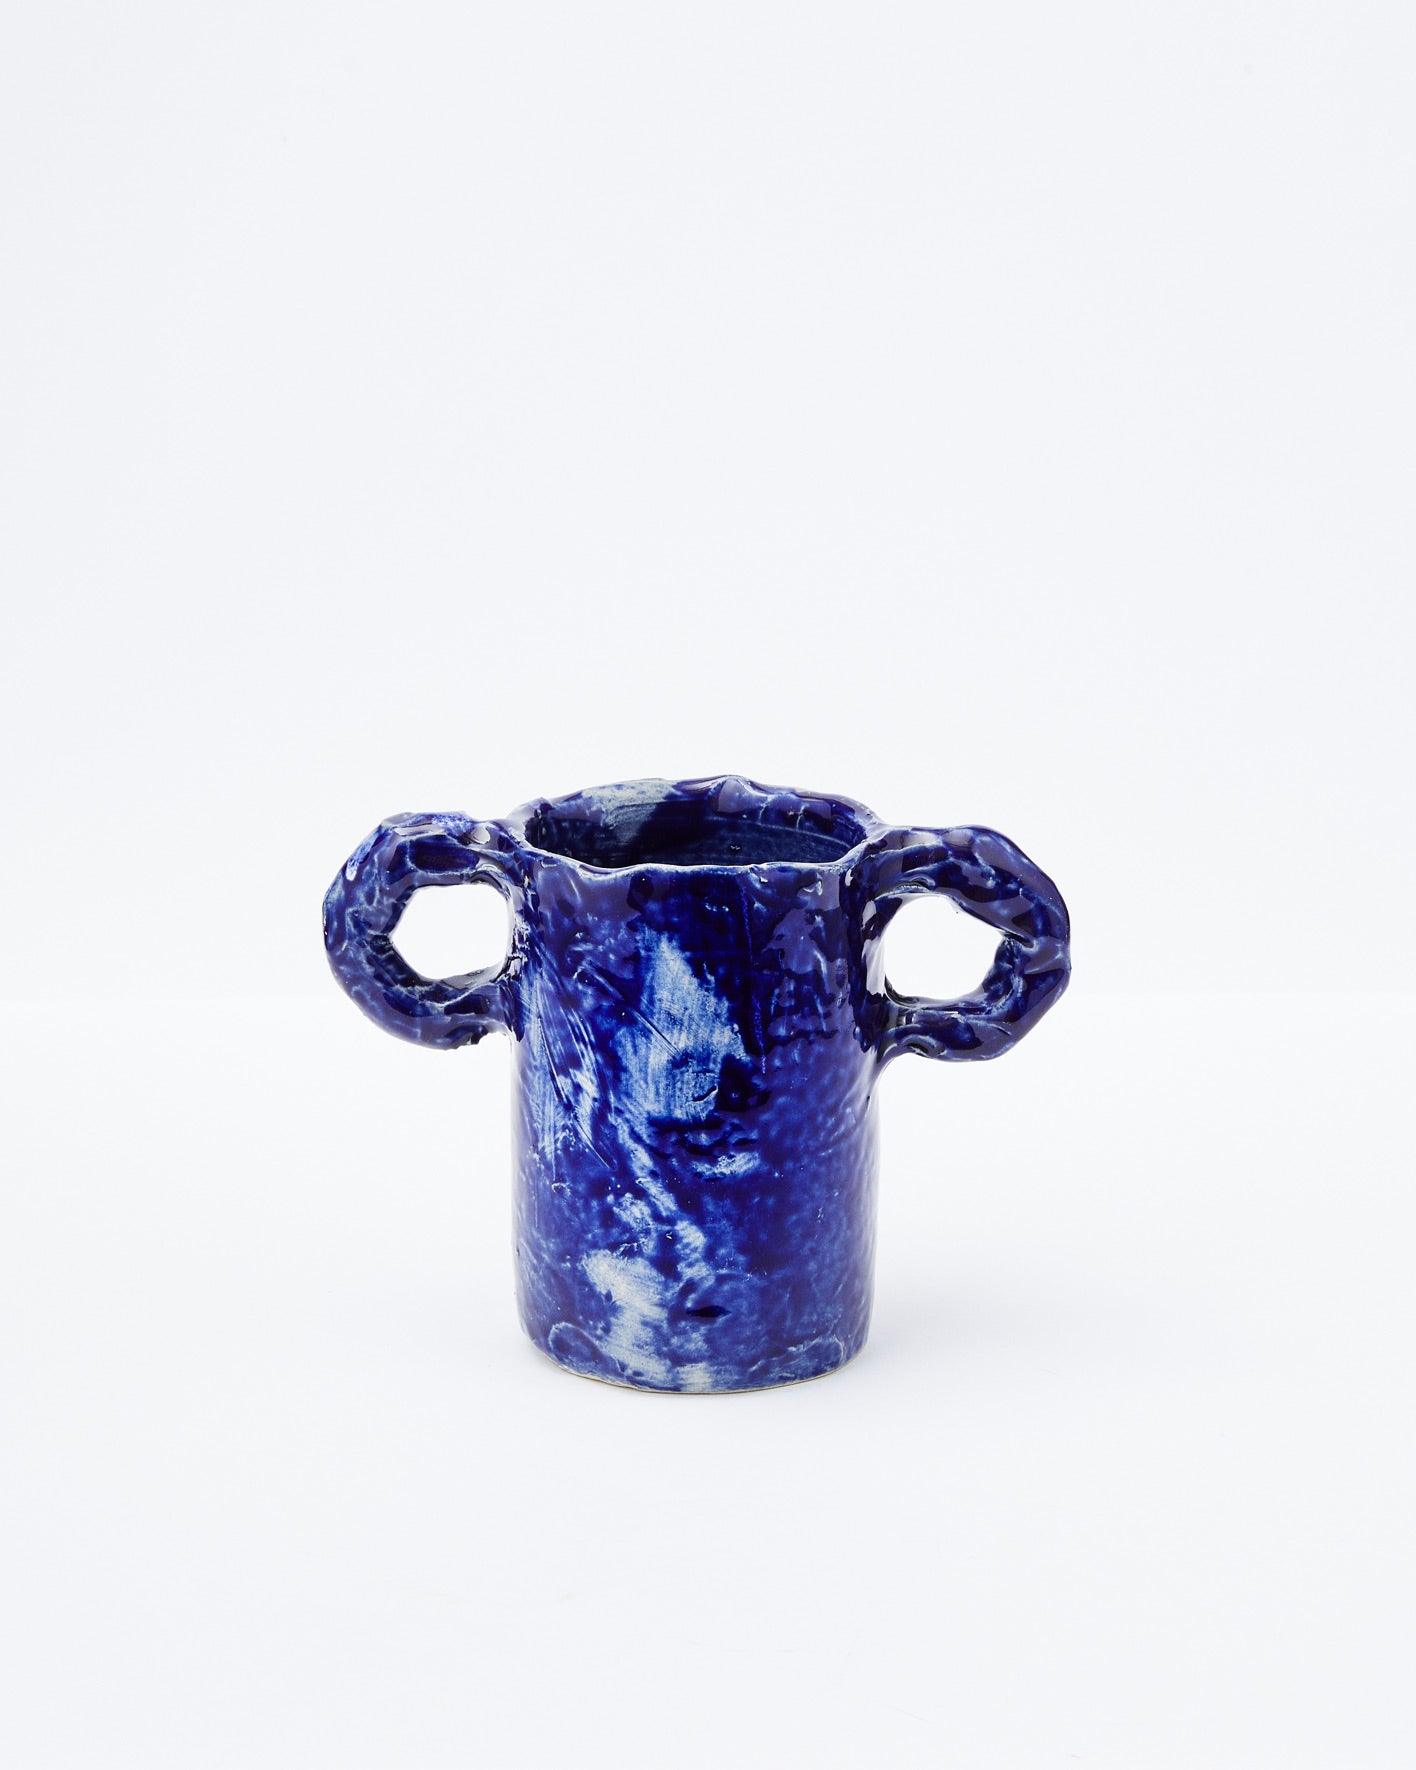 Dark blue modern ceramic vase with two handles on a white background